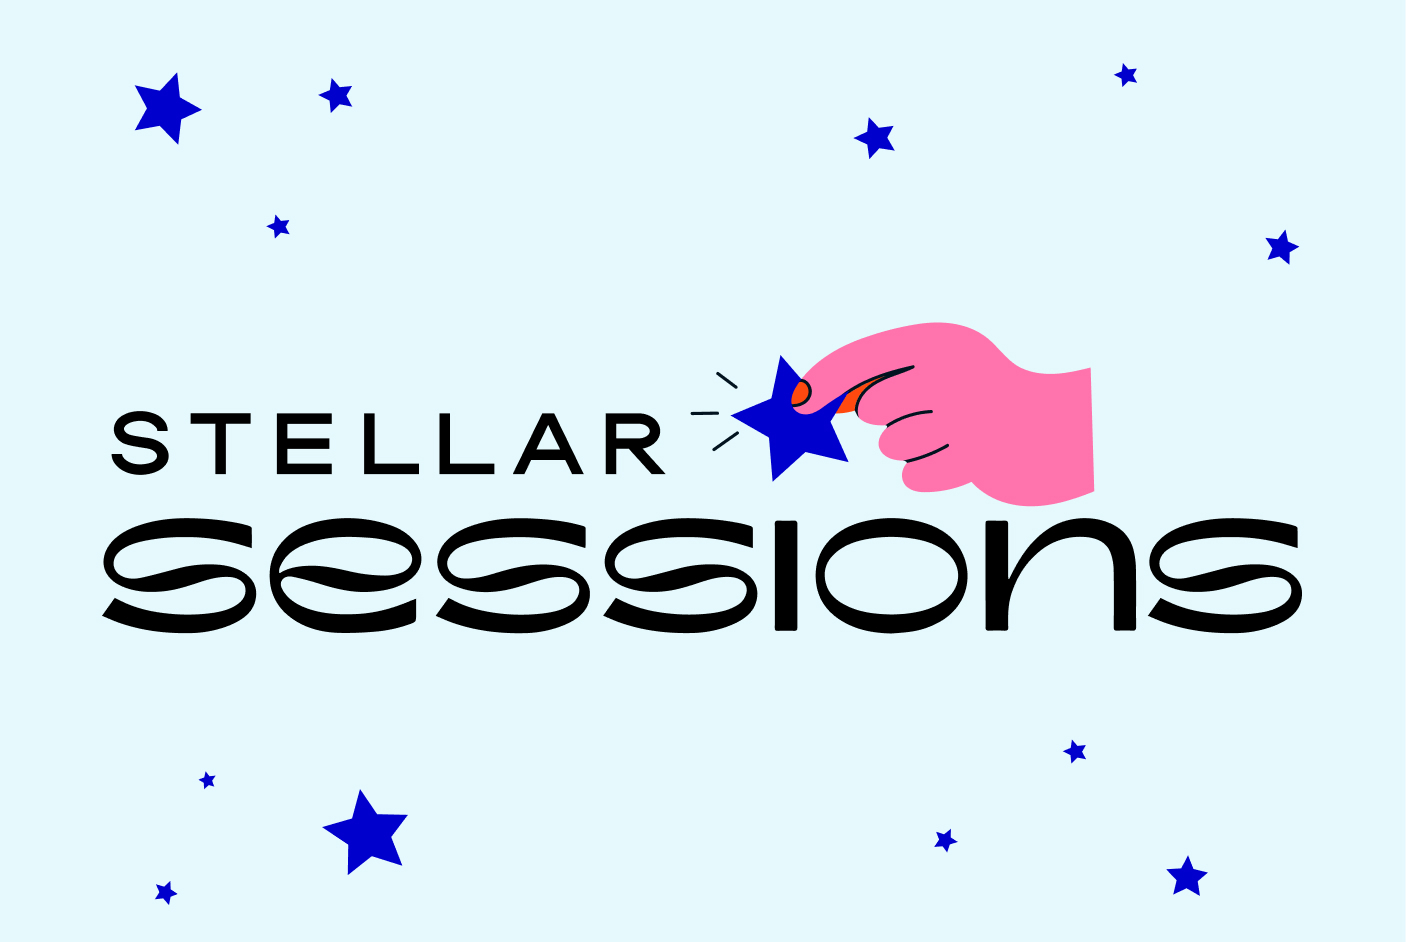 Stellar Sessions